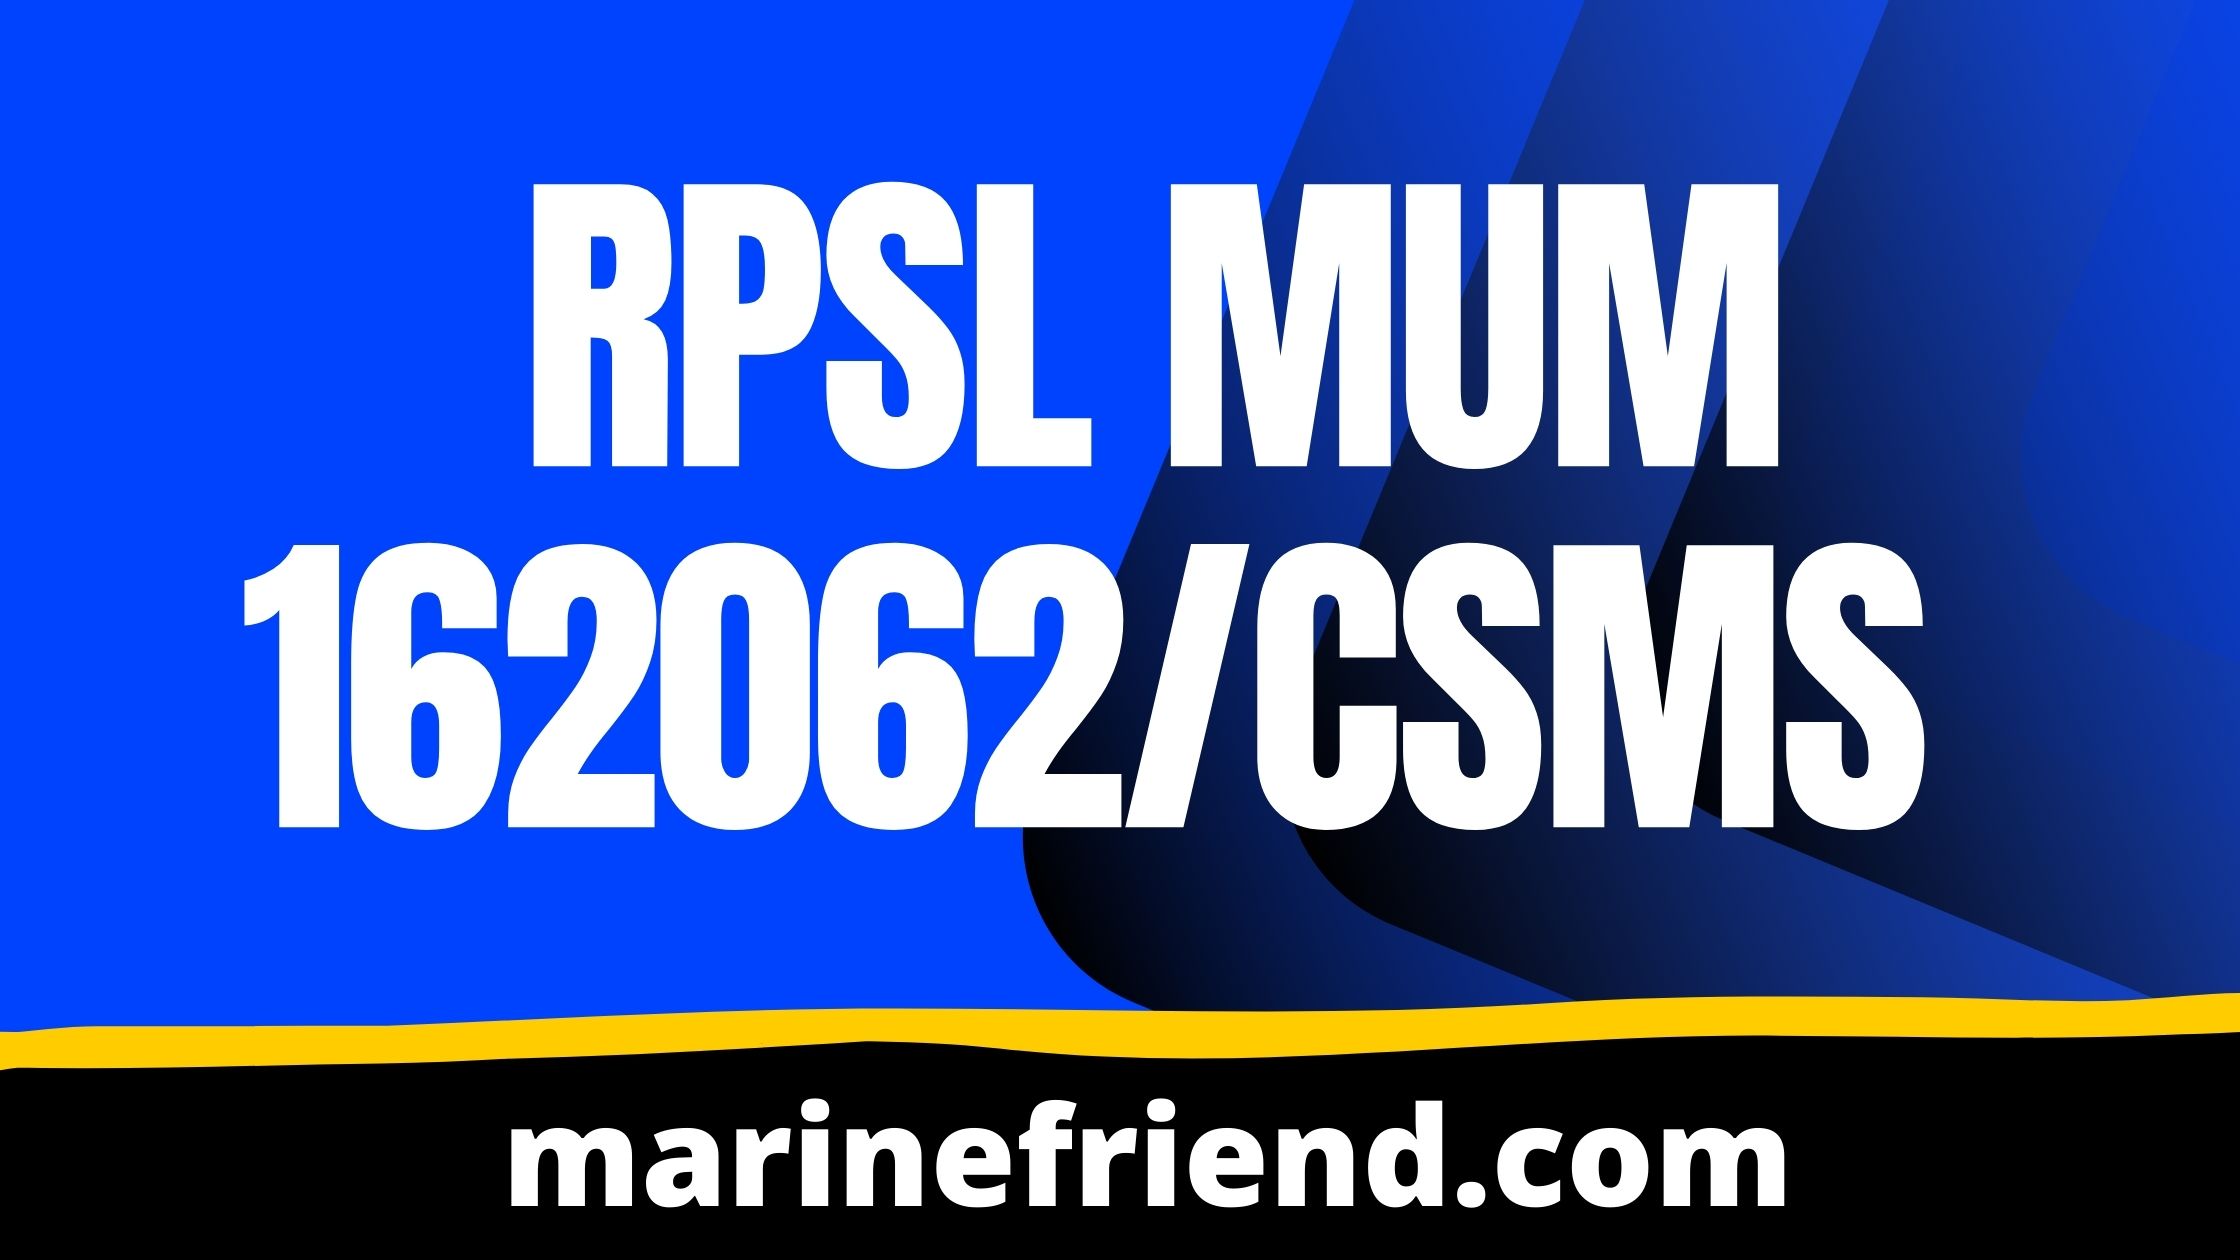 RPSL Mum 162062